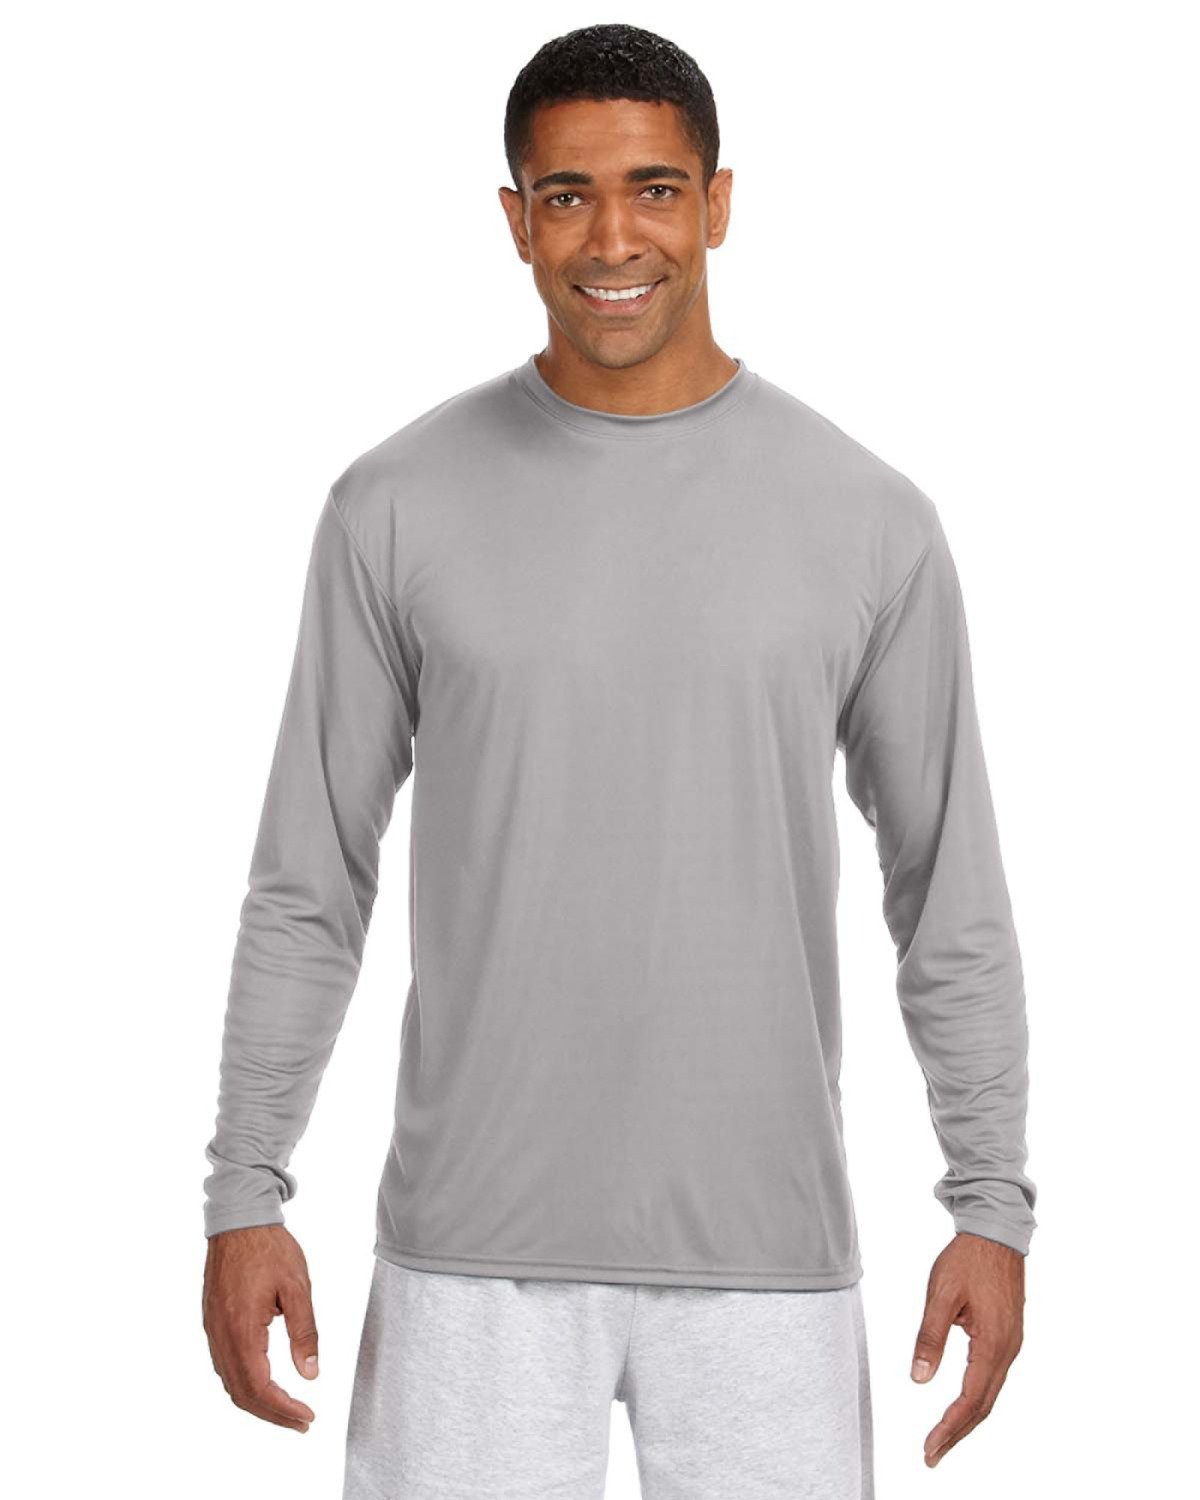 A4 Men's Cooling Performance Long Sleeve T-Shirt: Unleash Your Comfort